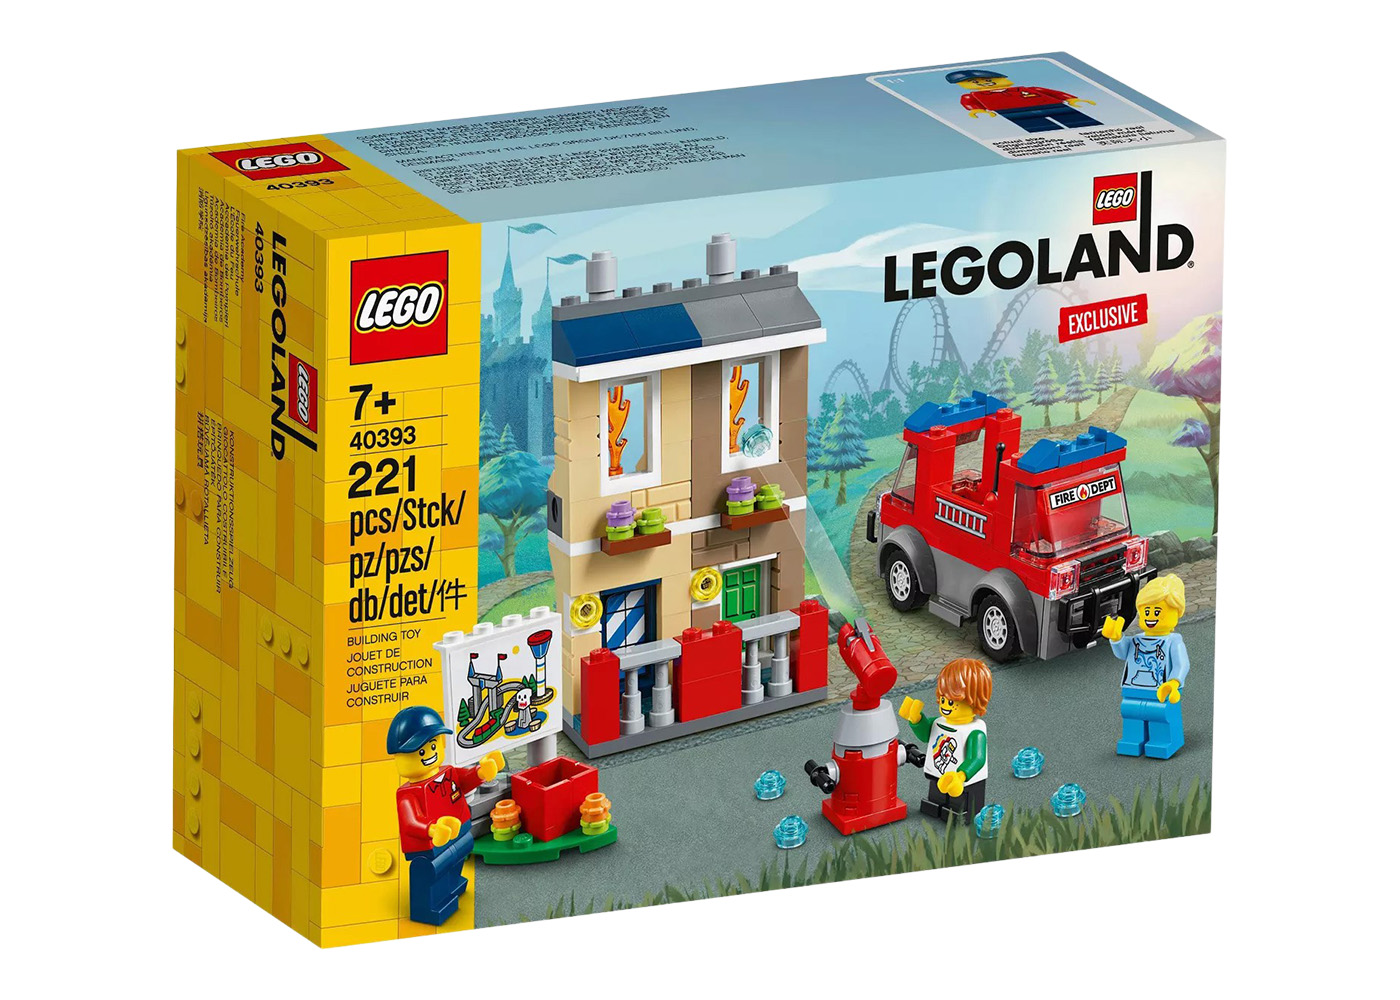 LEGO LEGOLAND Exclusive Set 40346 - US